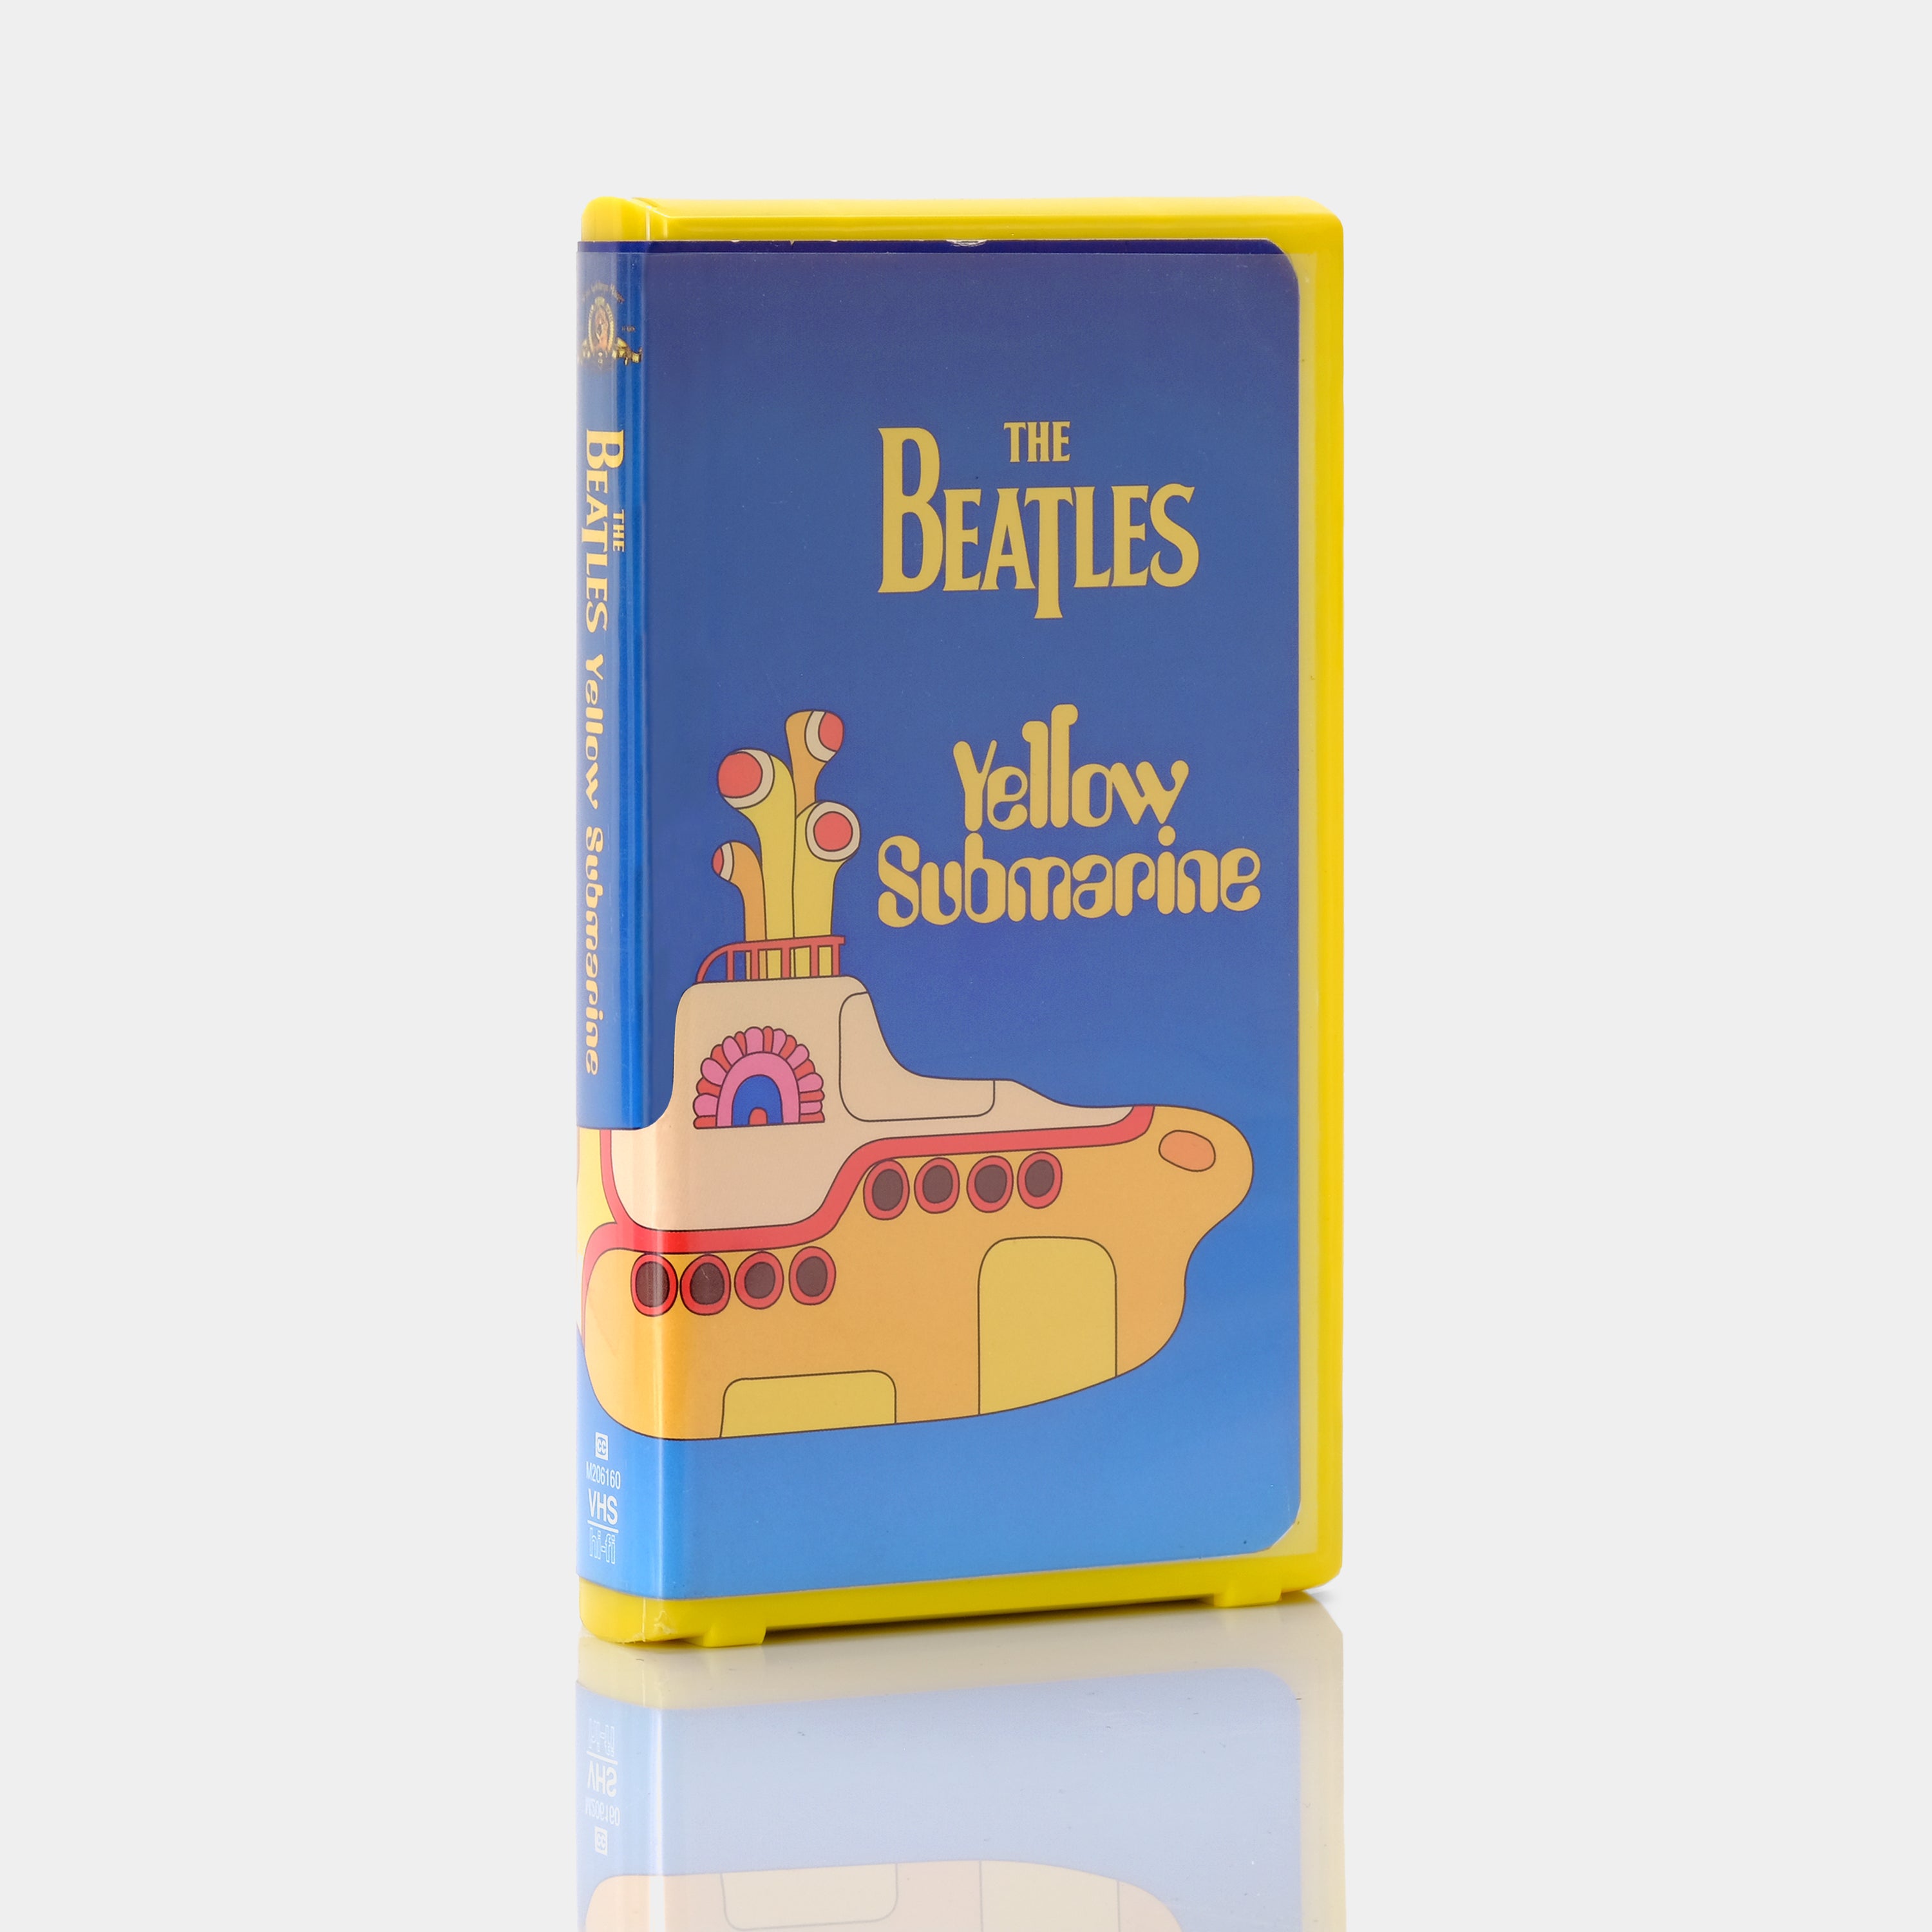 The Beatles: Yellow Submarine VHS Tape